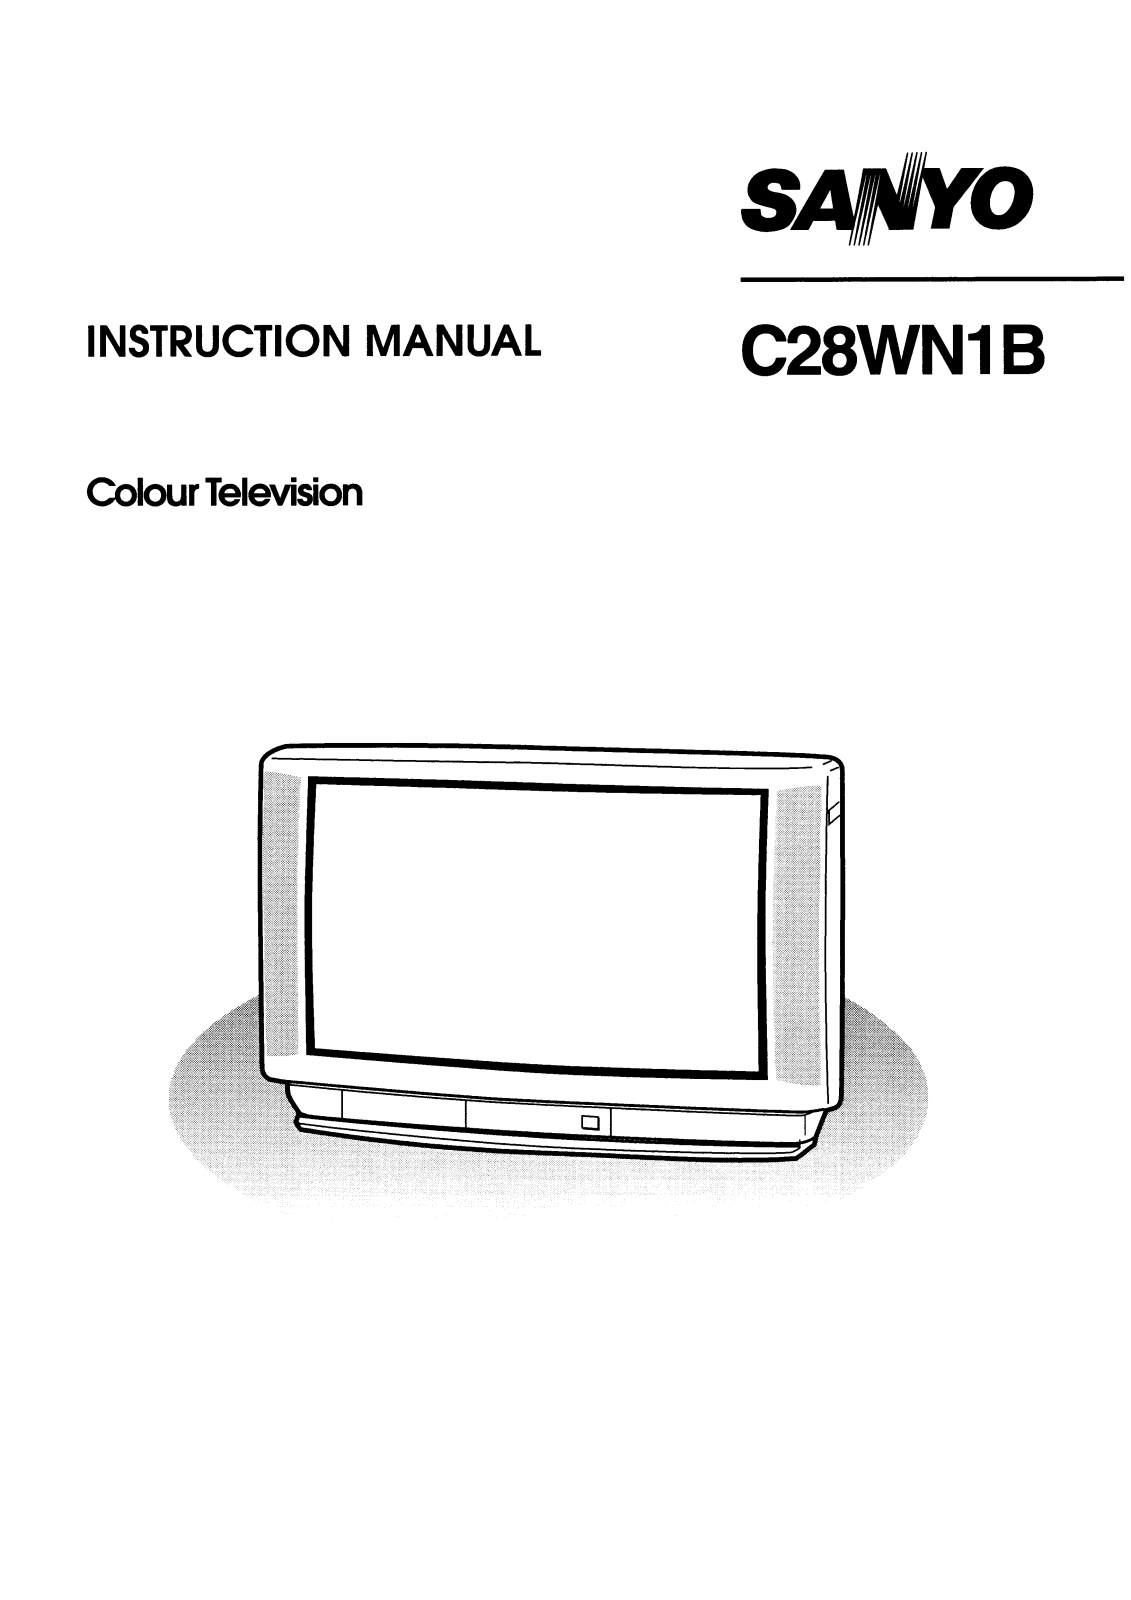 Sanyo C28WN1B Instruction Manual